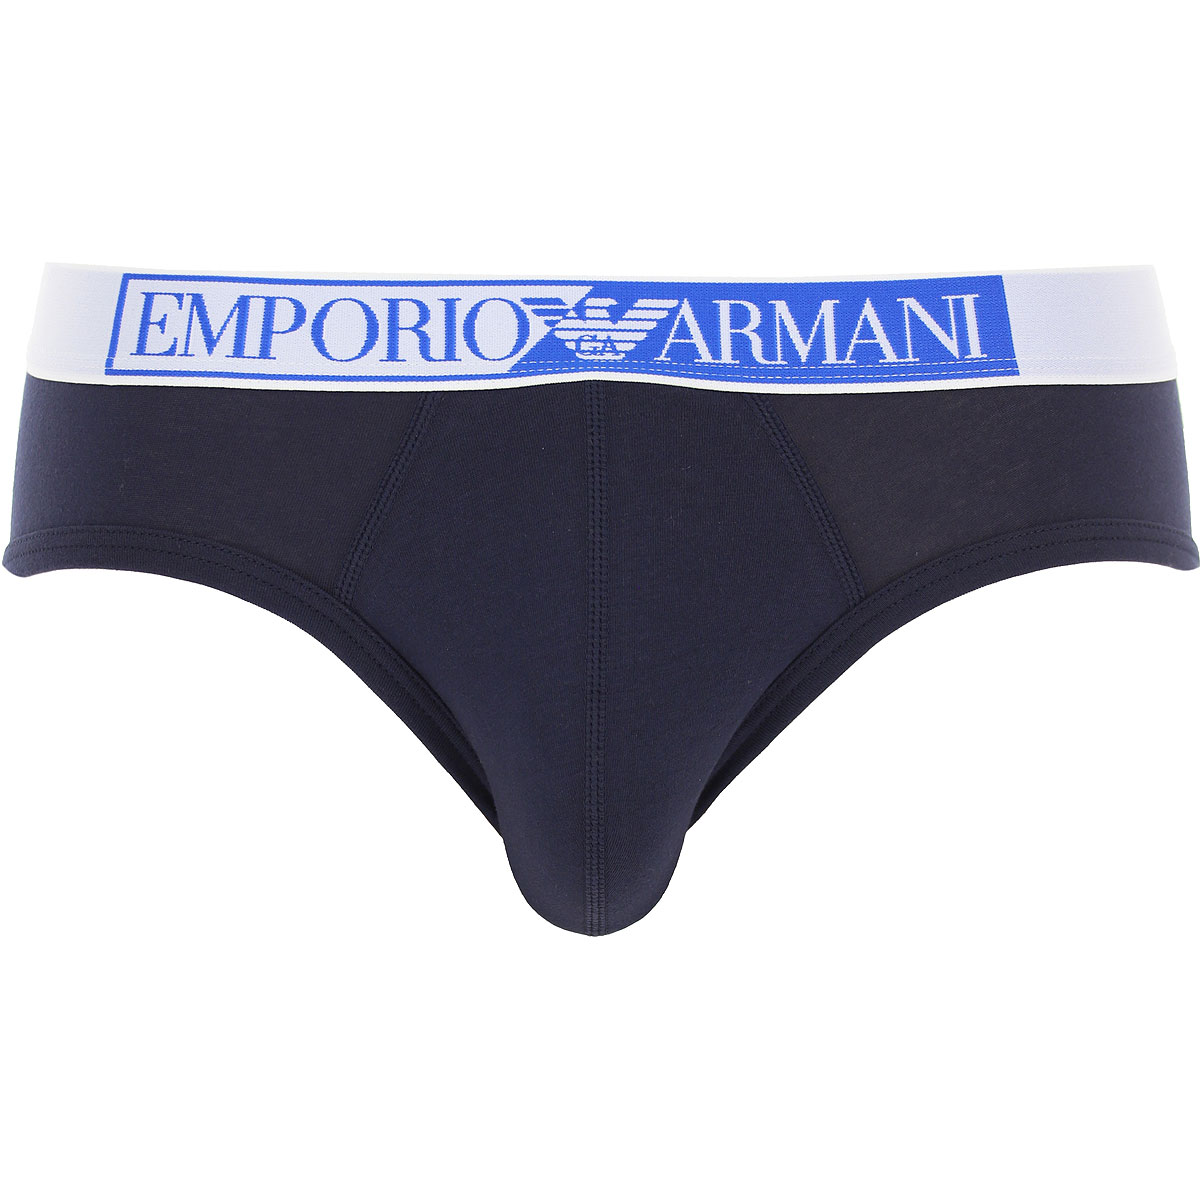 Mens Underwear Emporio Armani, Style code: 111285-2r729-00135